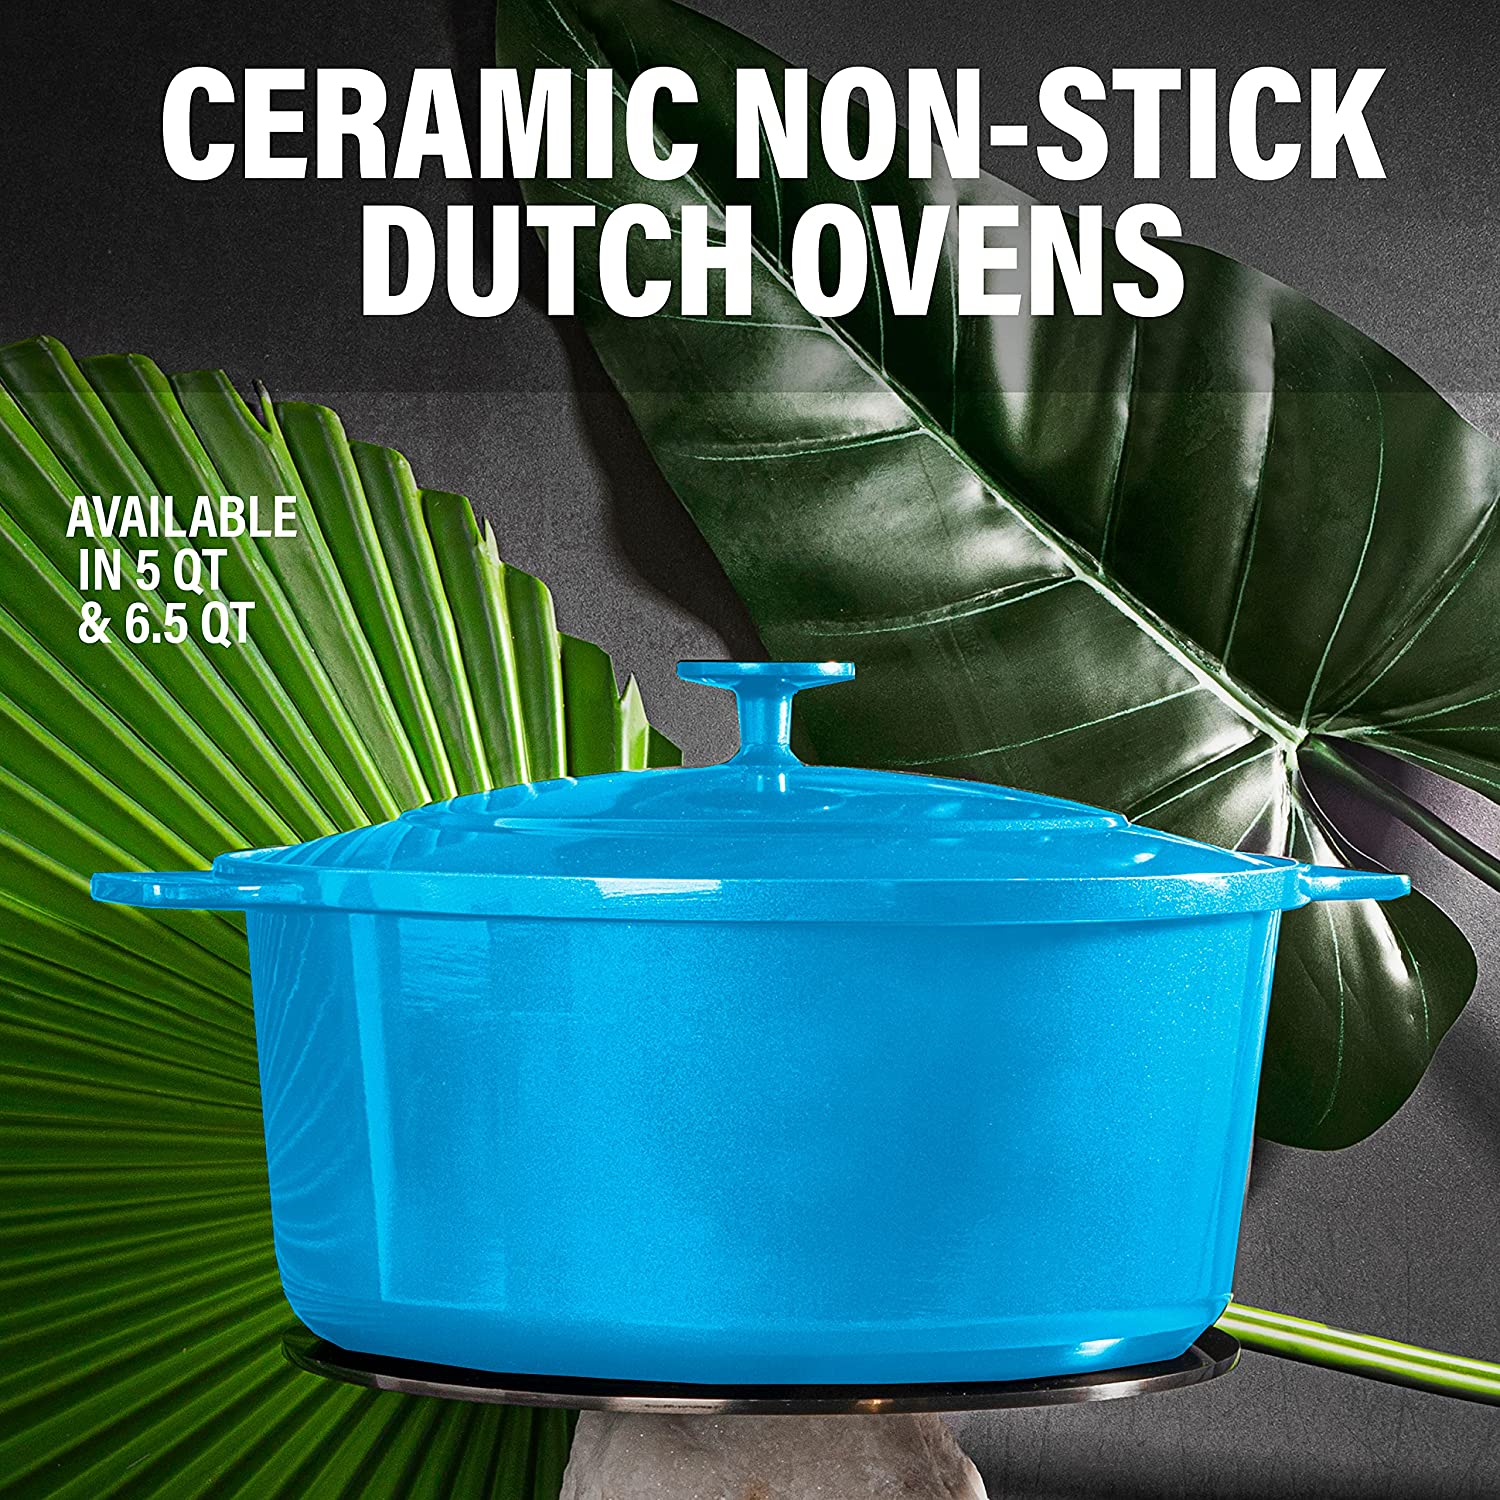 GraniteStone 6.5 qt. Nonstick Dutch Oven Pot with Self-Basting Lid